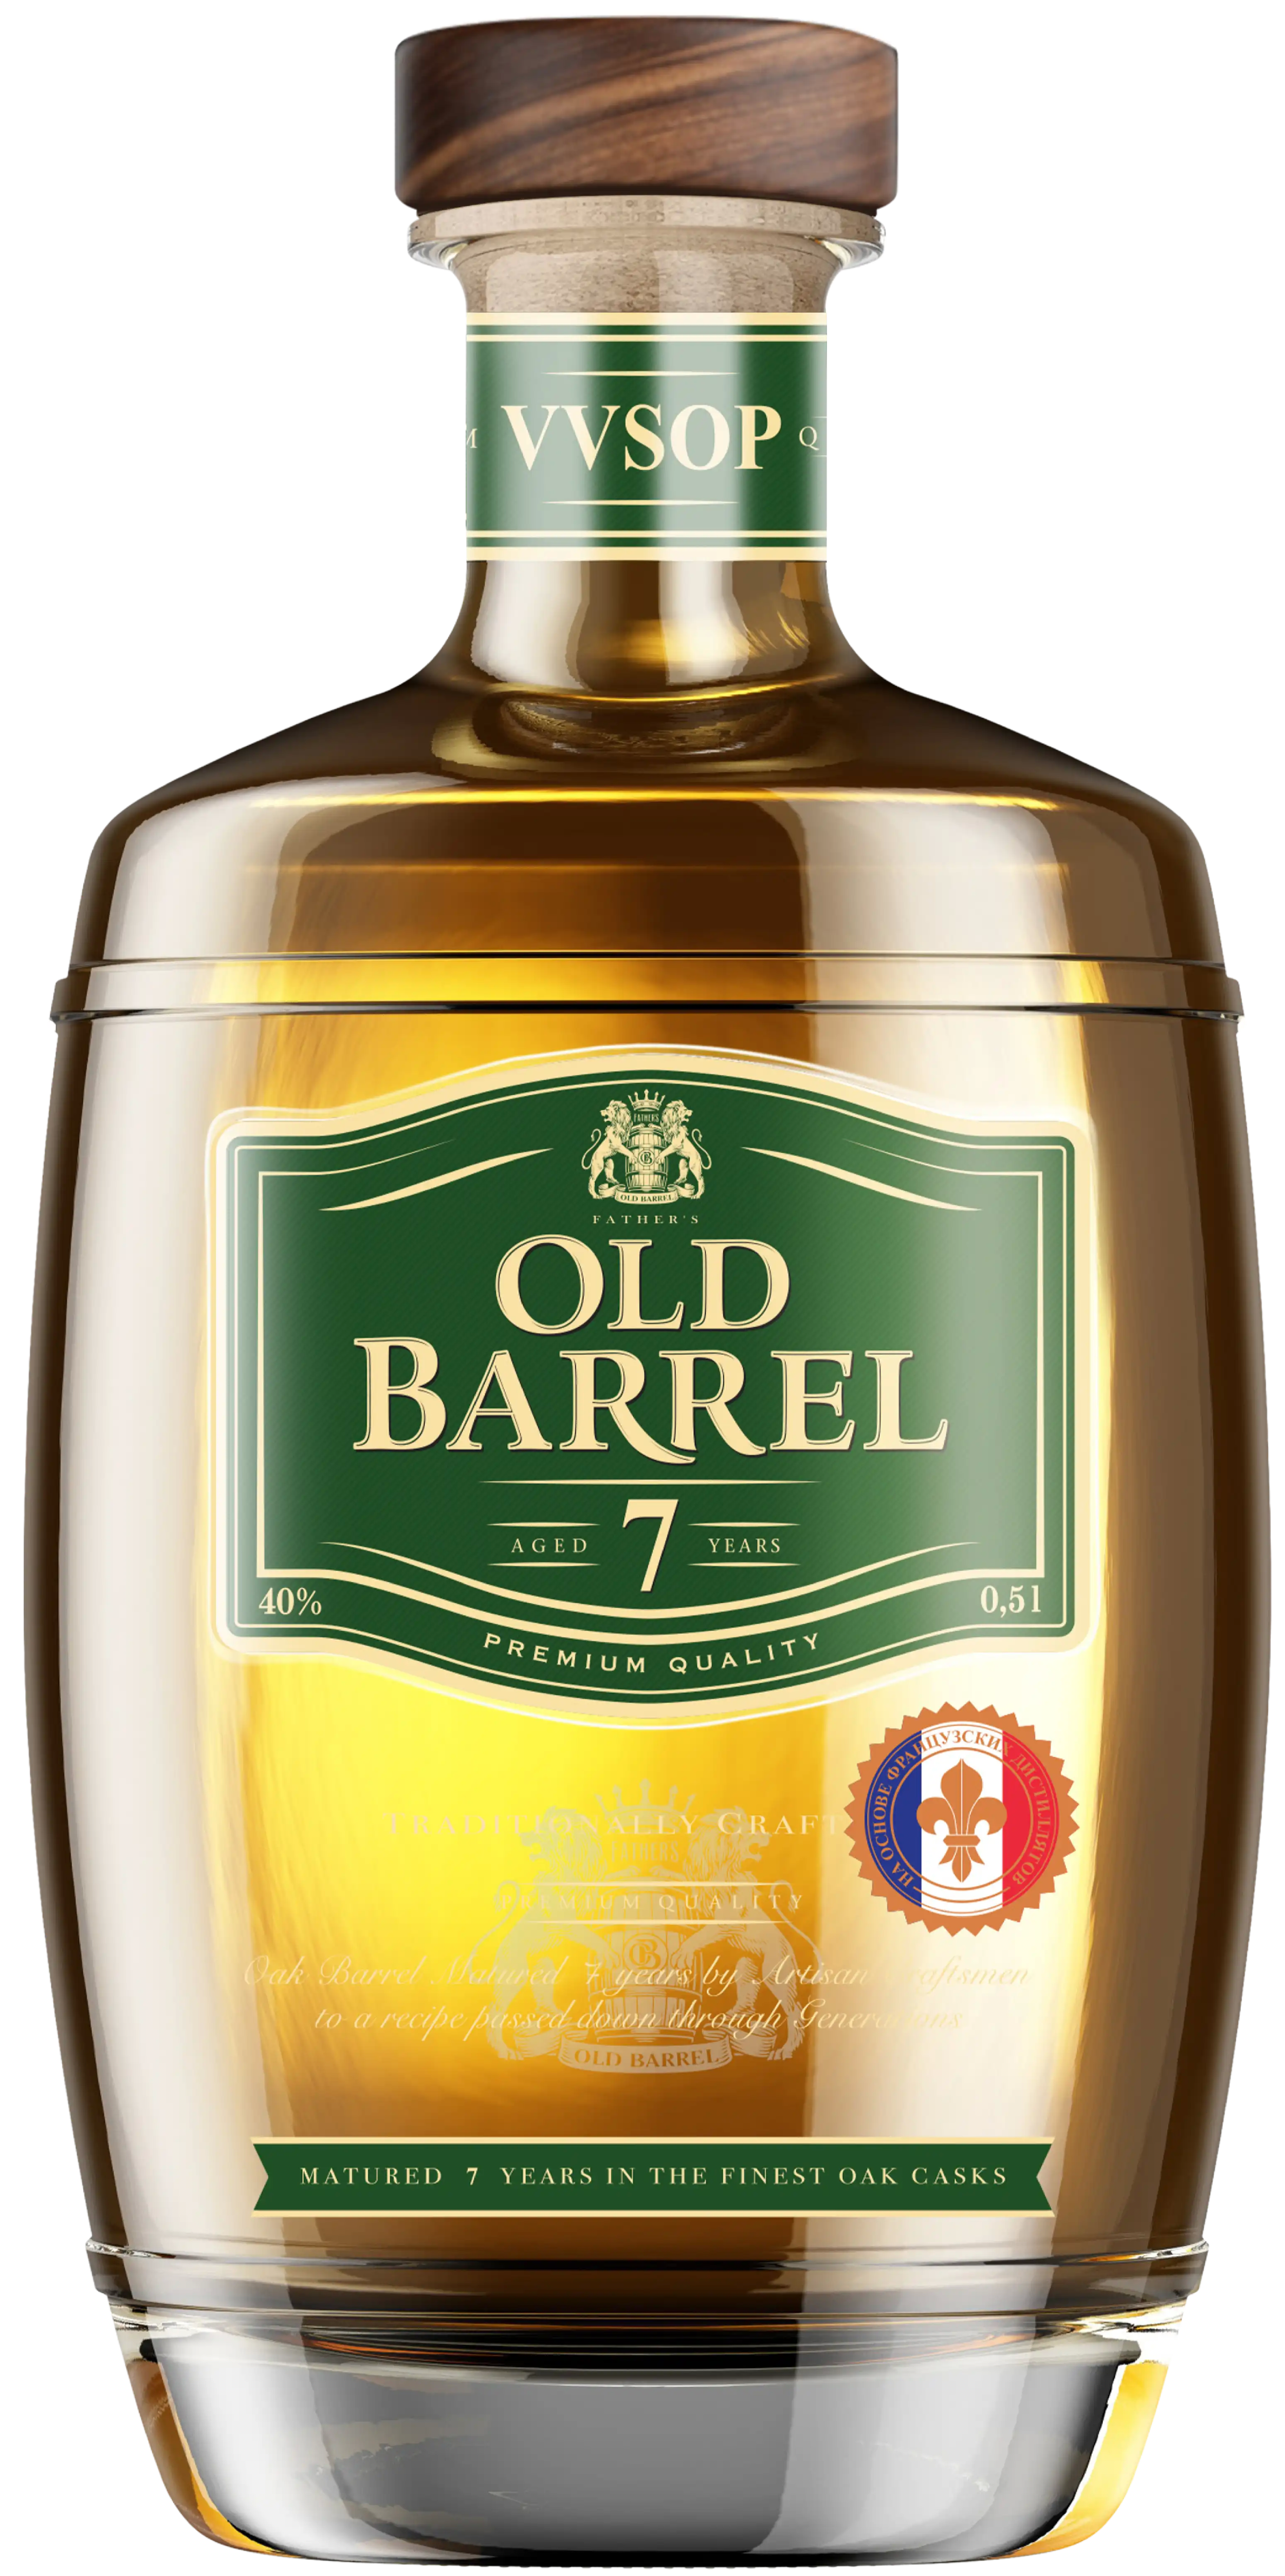 Father's Old Barrel KV (Фазерс Олд Баррель 7 лет КВ)